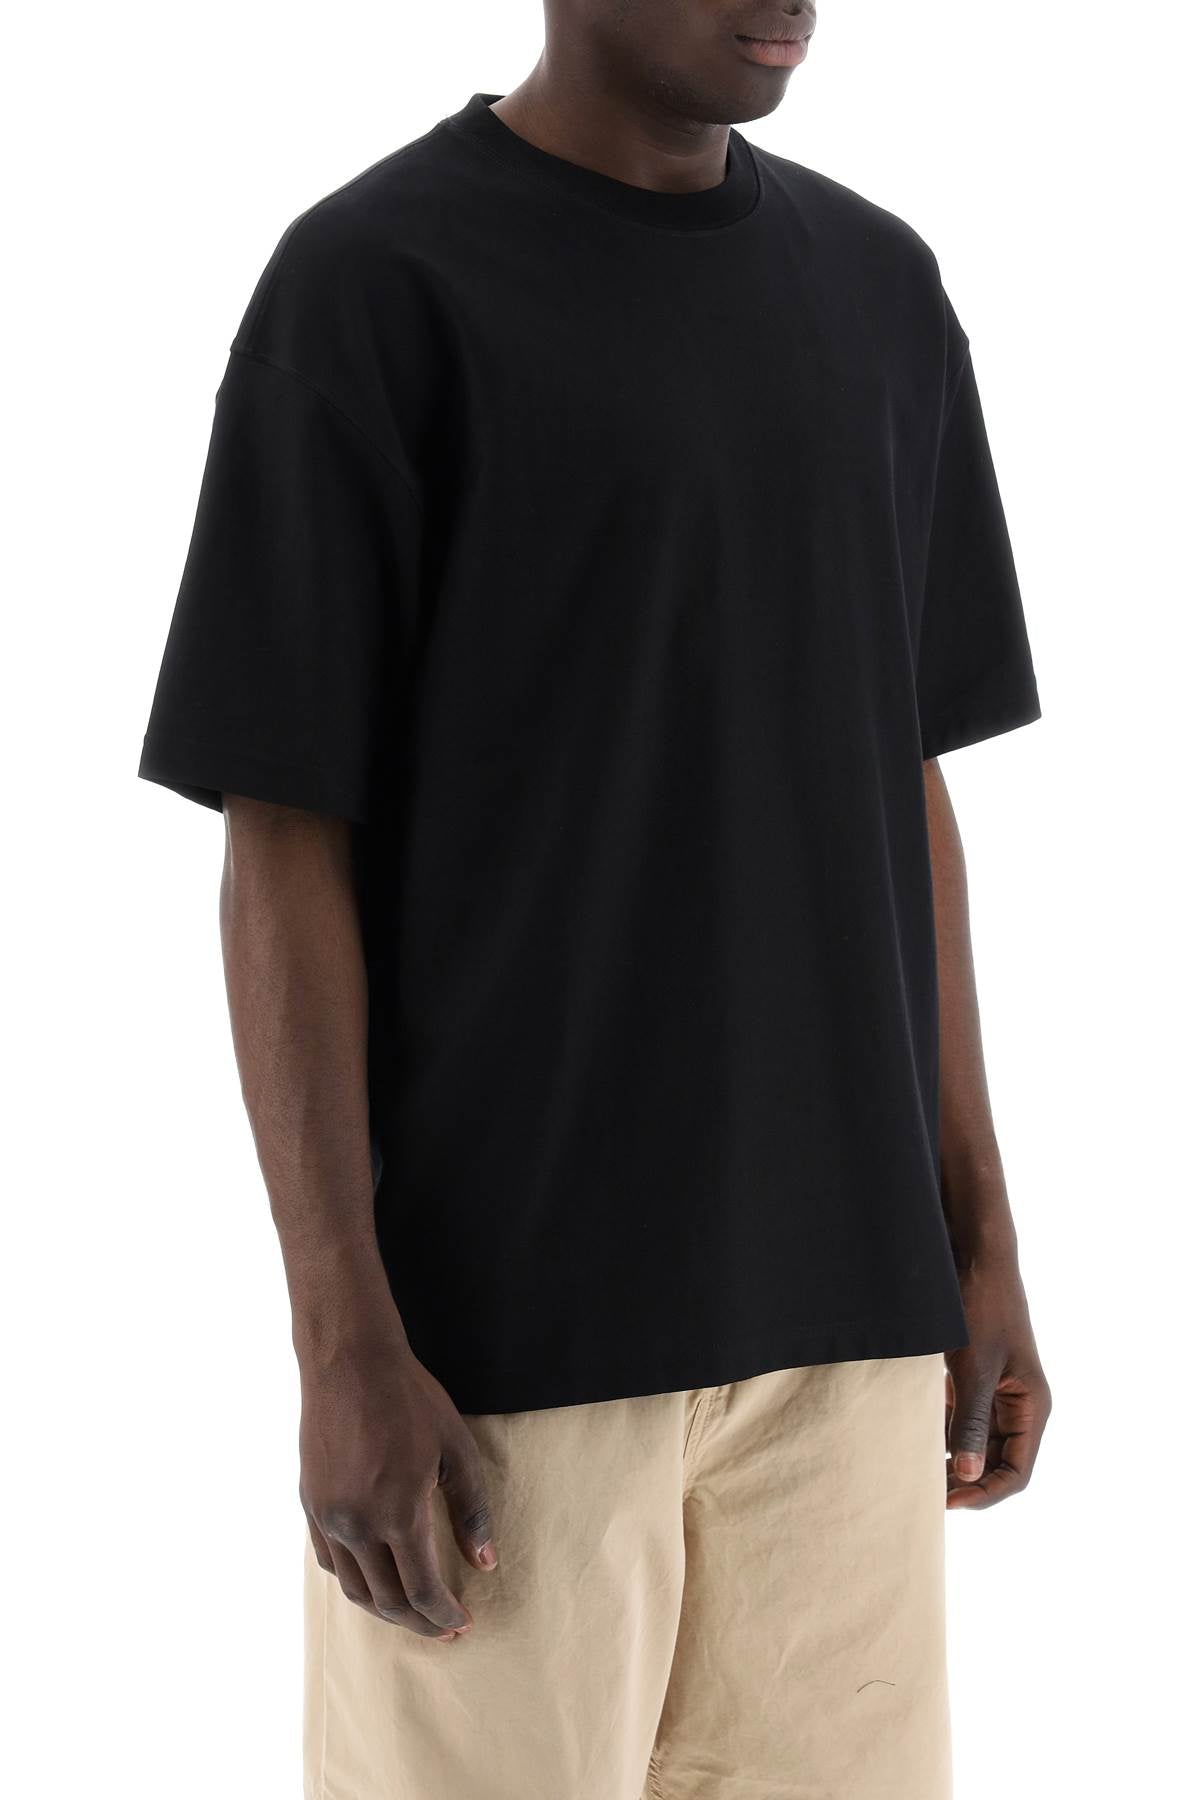 Carhartt wip organic cotton dawson t-shirt for-men > clothing > t-shirts and sweatshirts > t-shirts-Carhartt Wip-Urbanheer